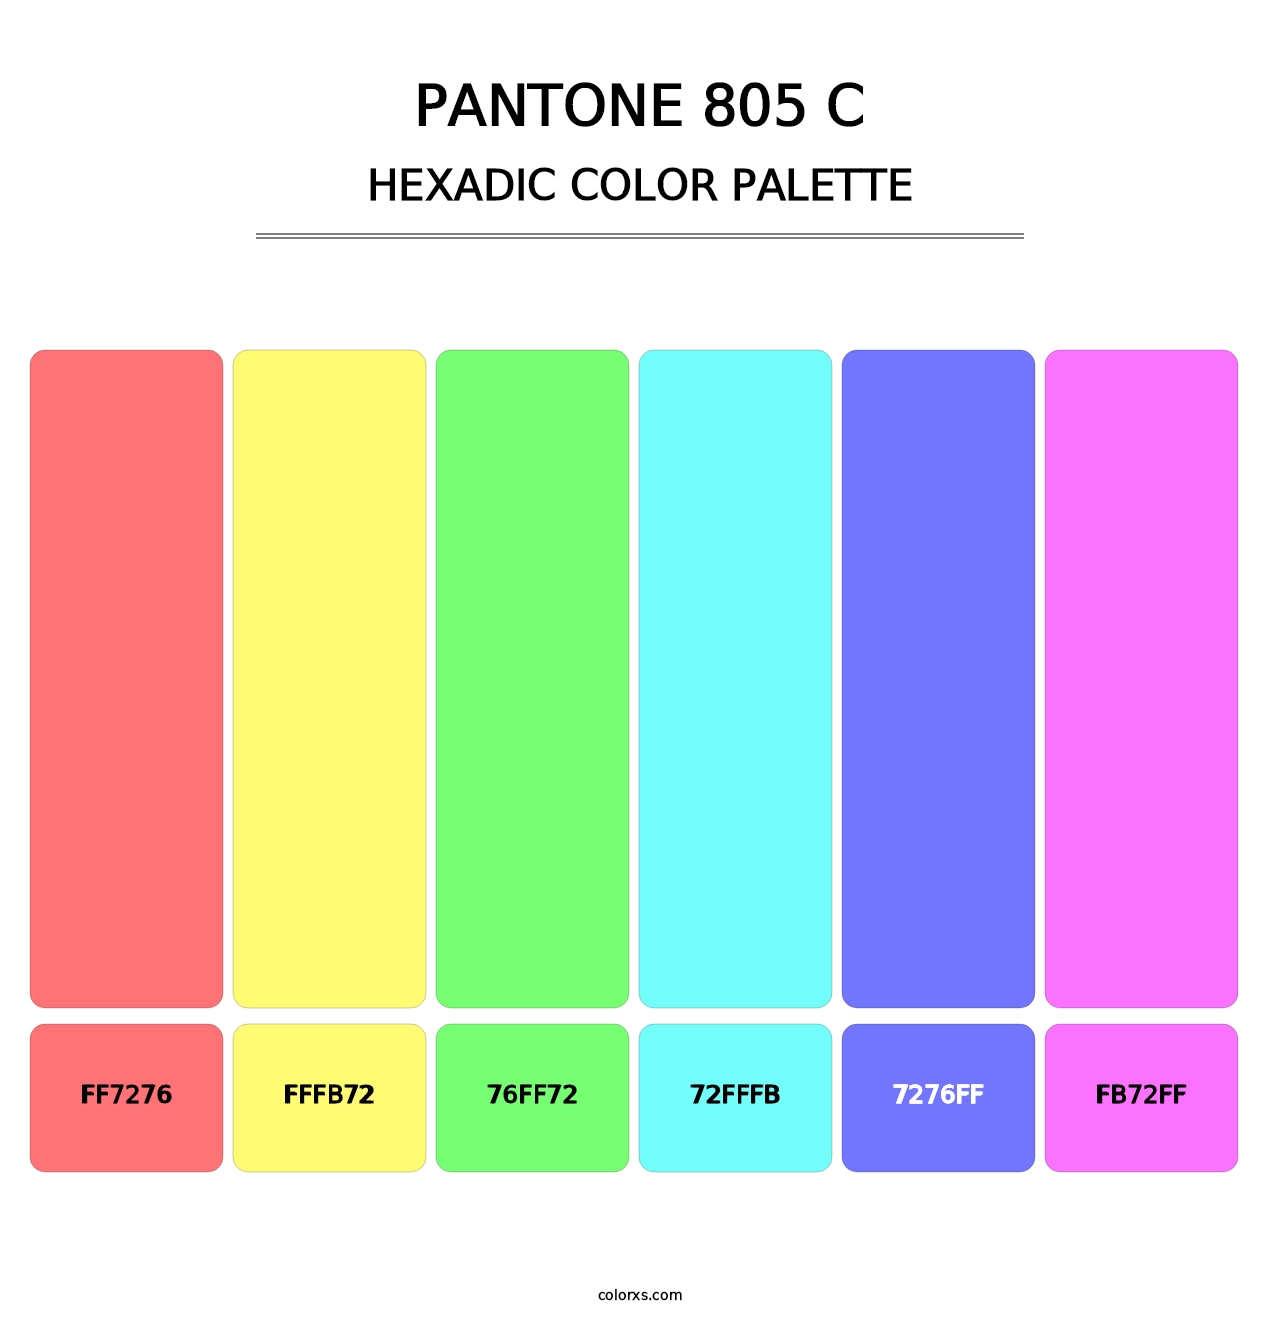 PANTONE 805 C - Hexadic Color Palette